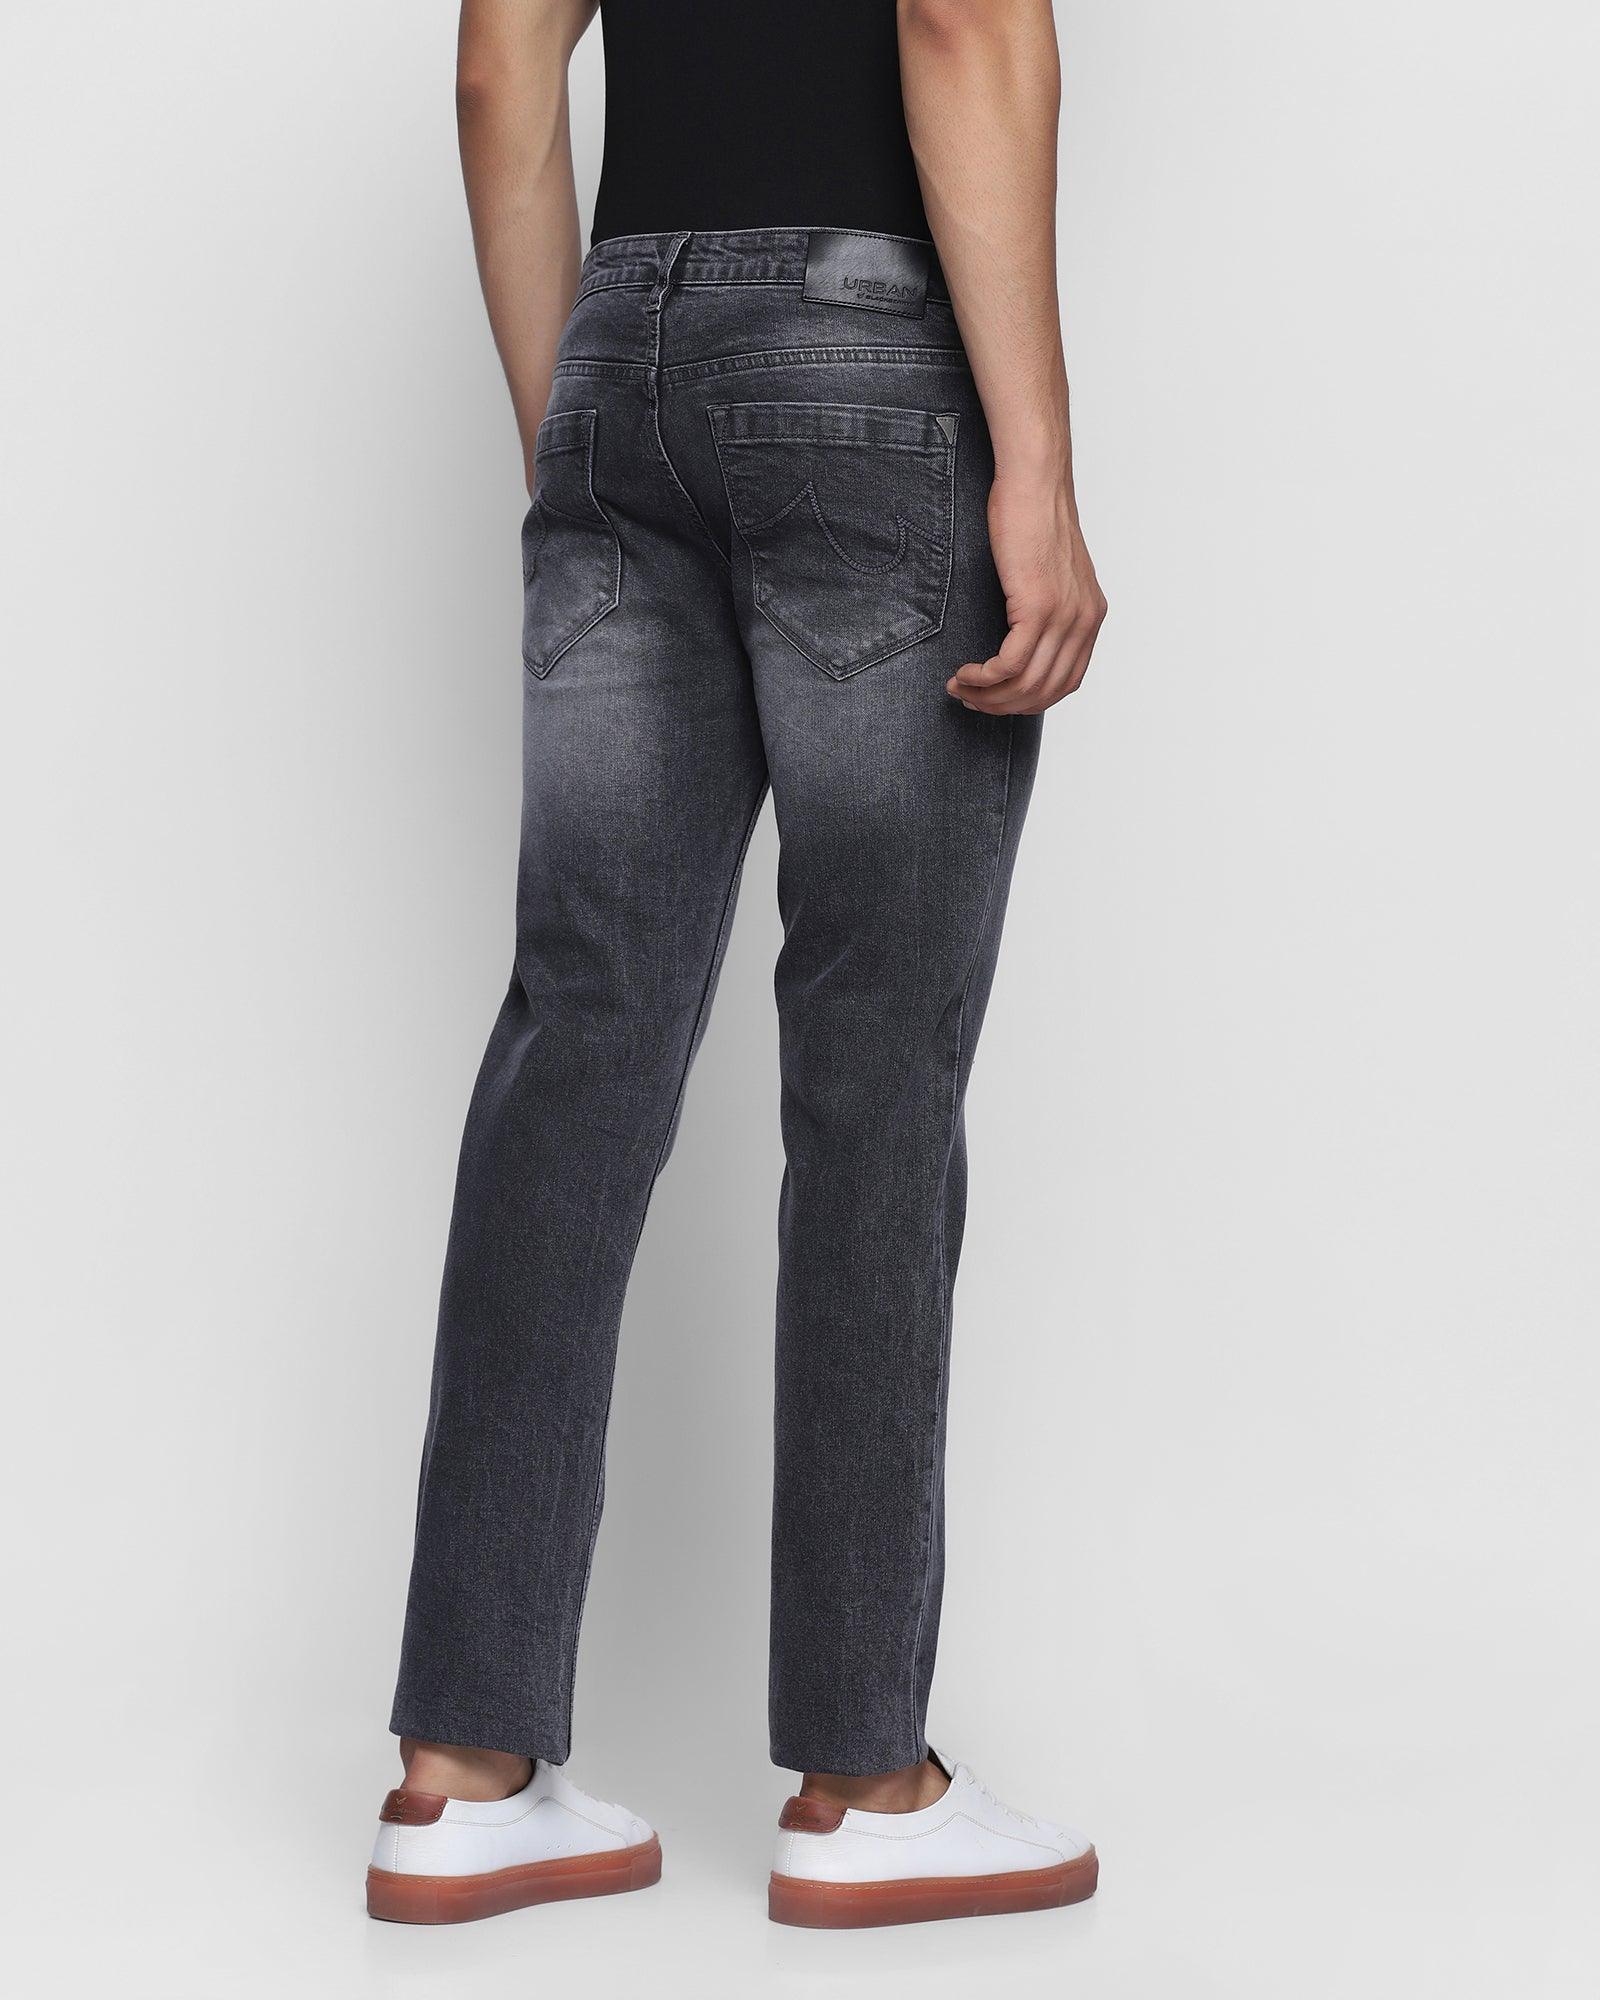 Levi's Men's 511 Slim Fit Jeans - New Grey/Black 3D — Dave's New York